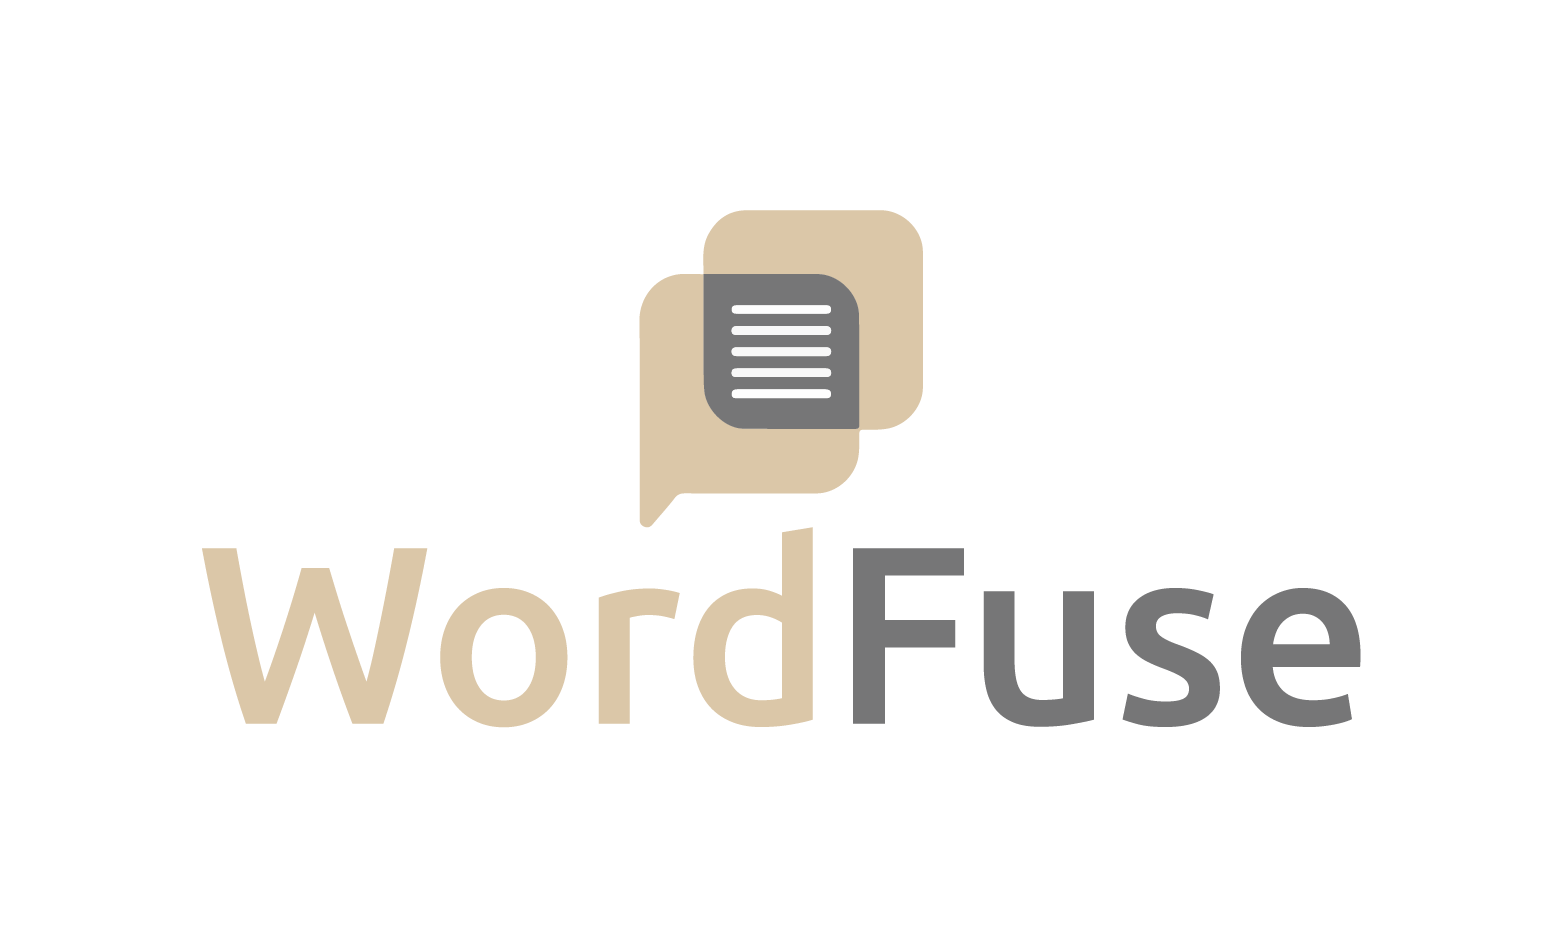 WordFuse.com - Creative brandable domain for sale